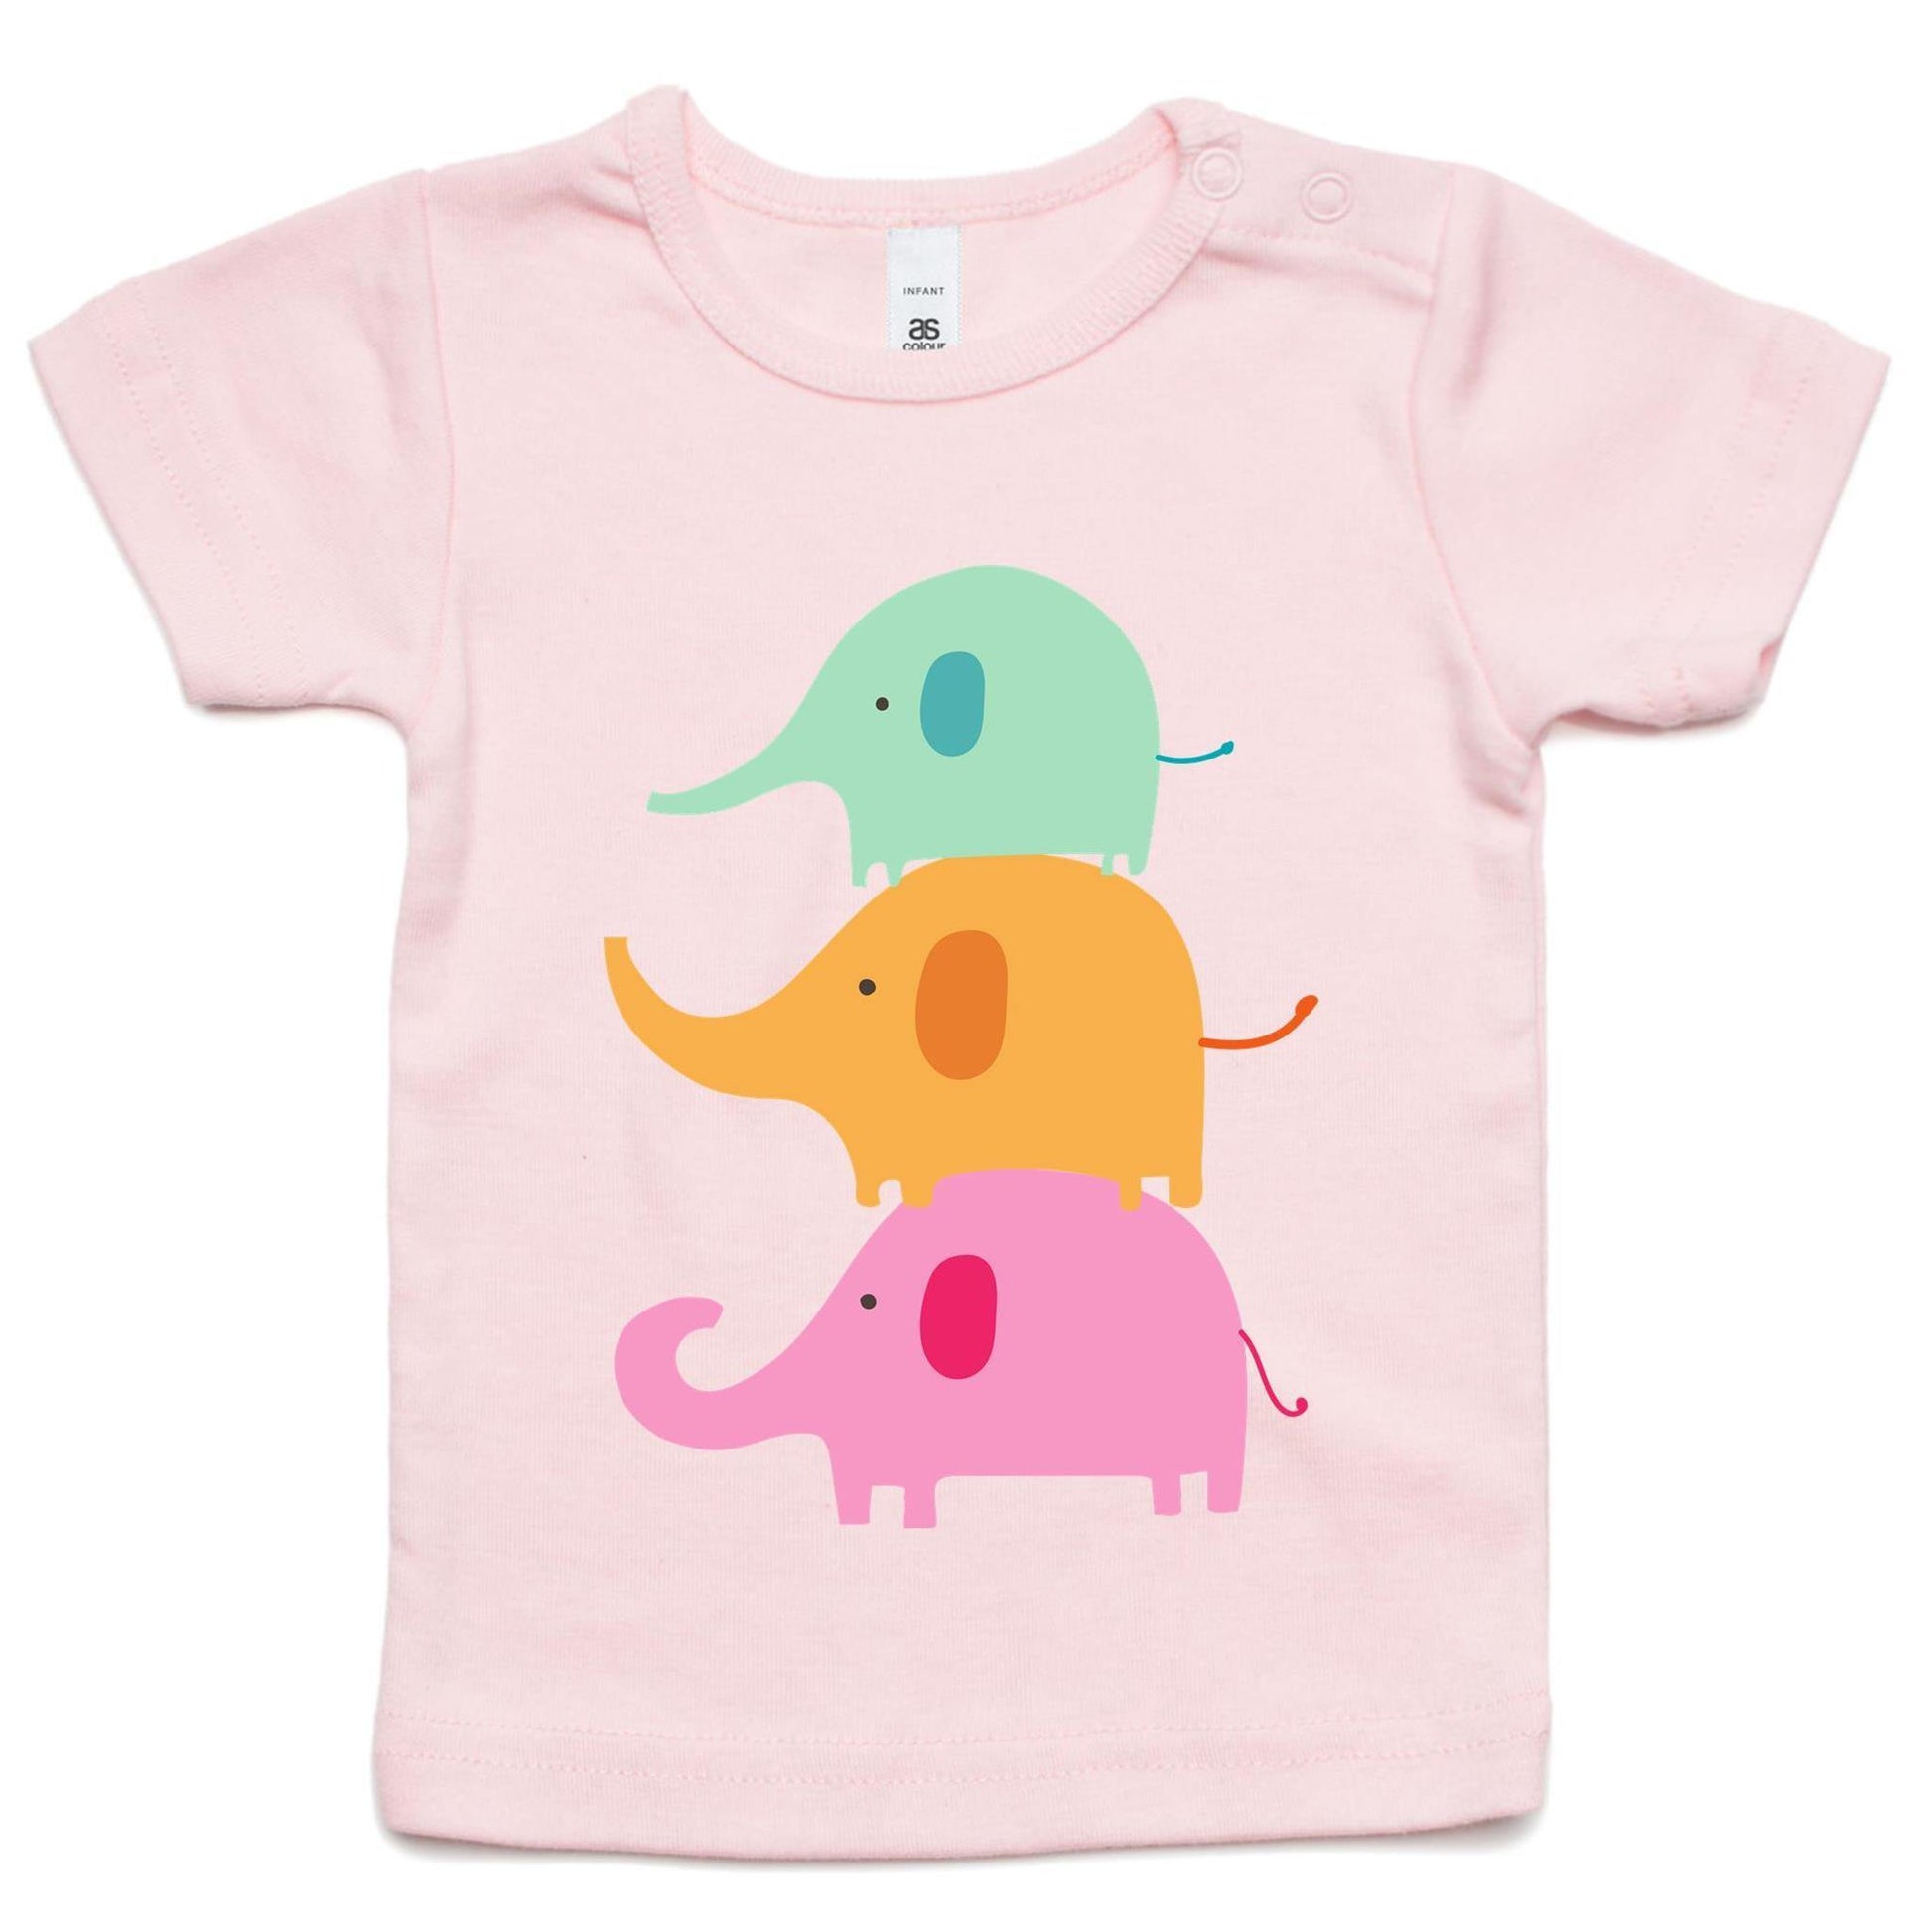 Three Cute Elephants - Baby T-shirt Pink Baby T-shirt animal kids